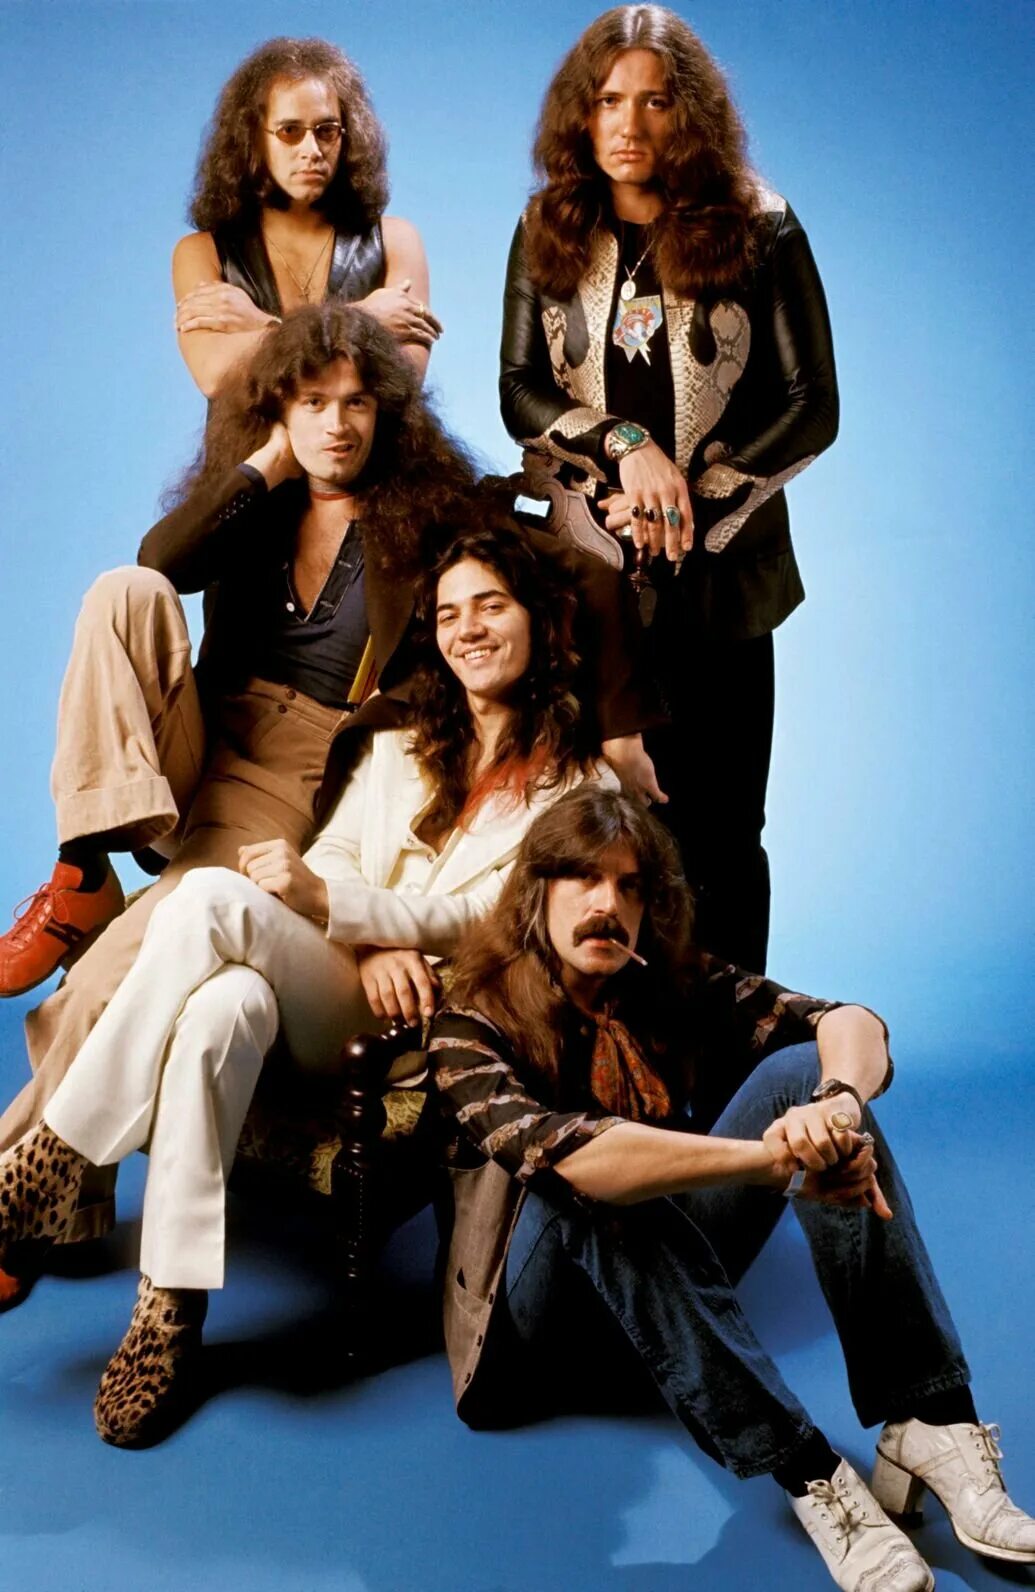 Ди перпл. Дип пёпл. Группа Deep Purple. Группа Deep Purple 1970. Группа дип пёрпл.